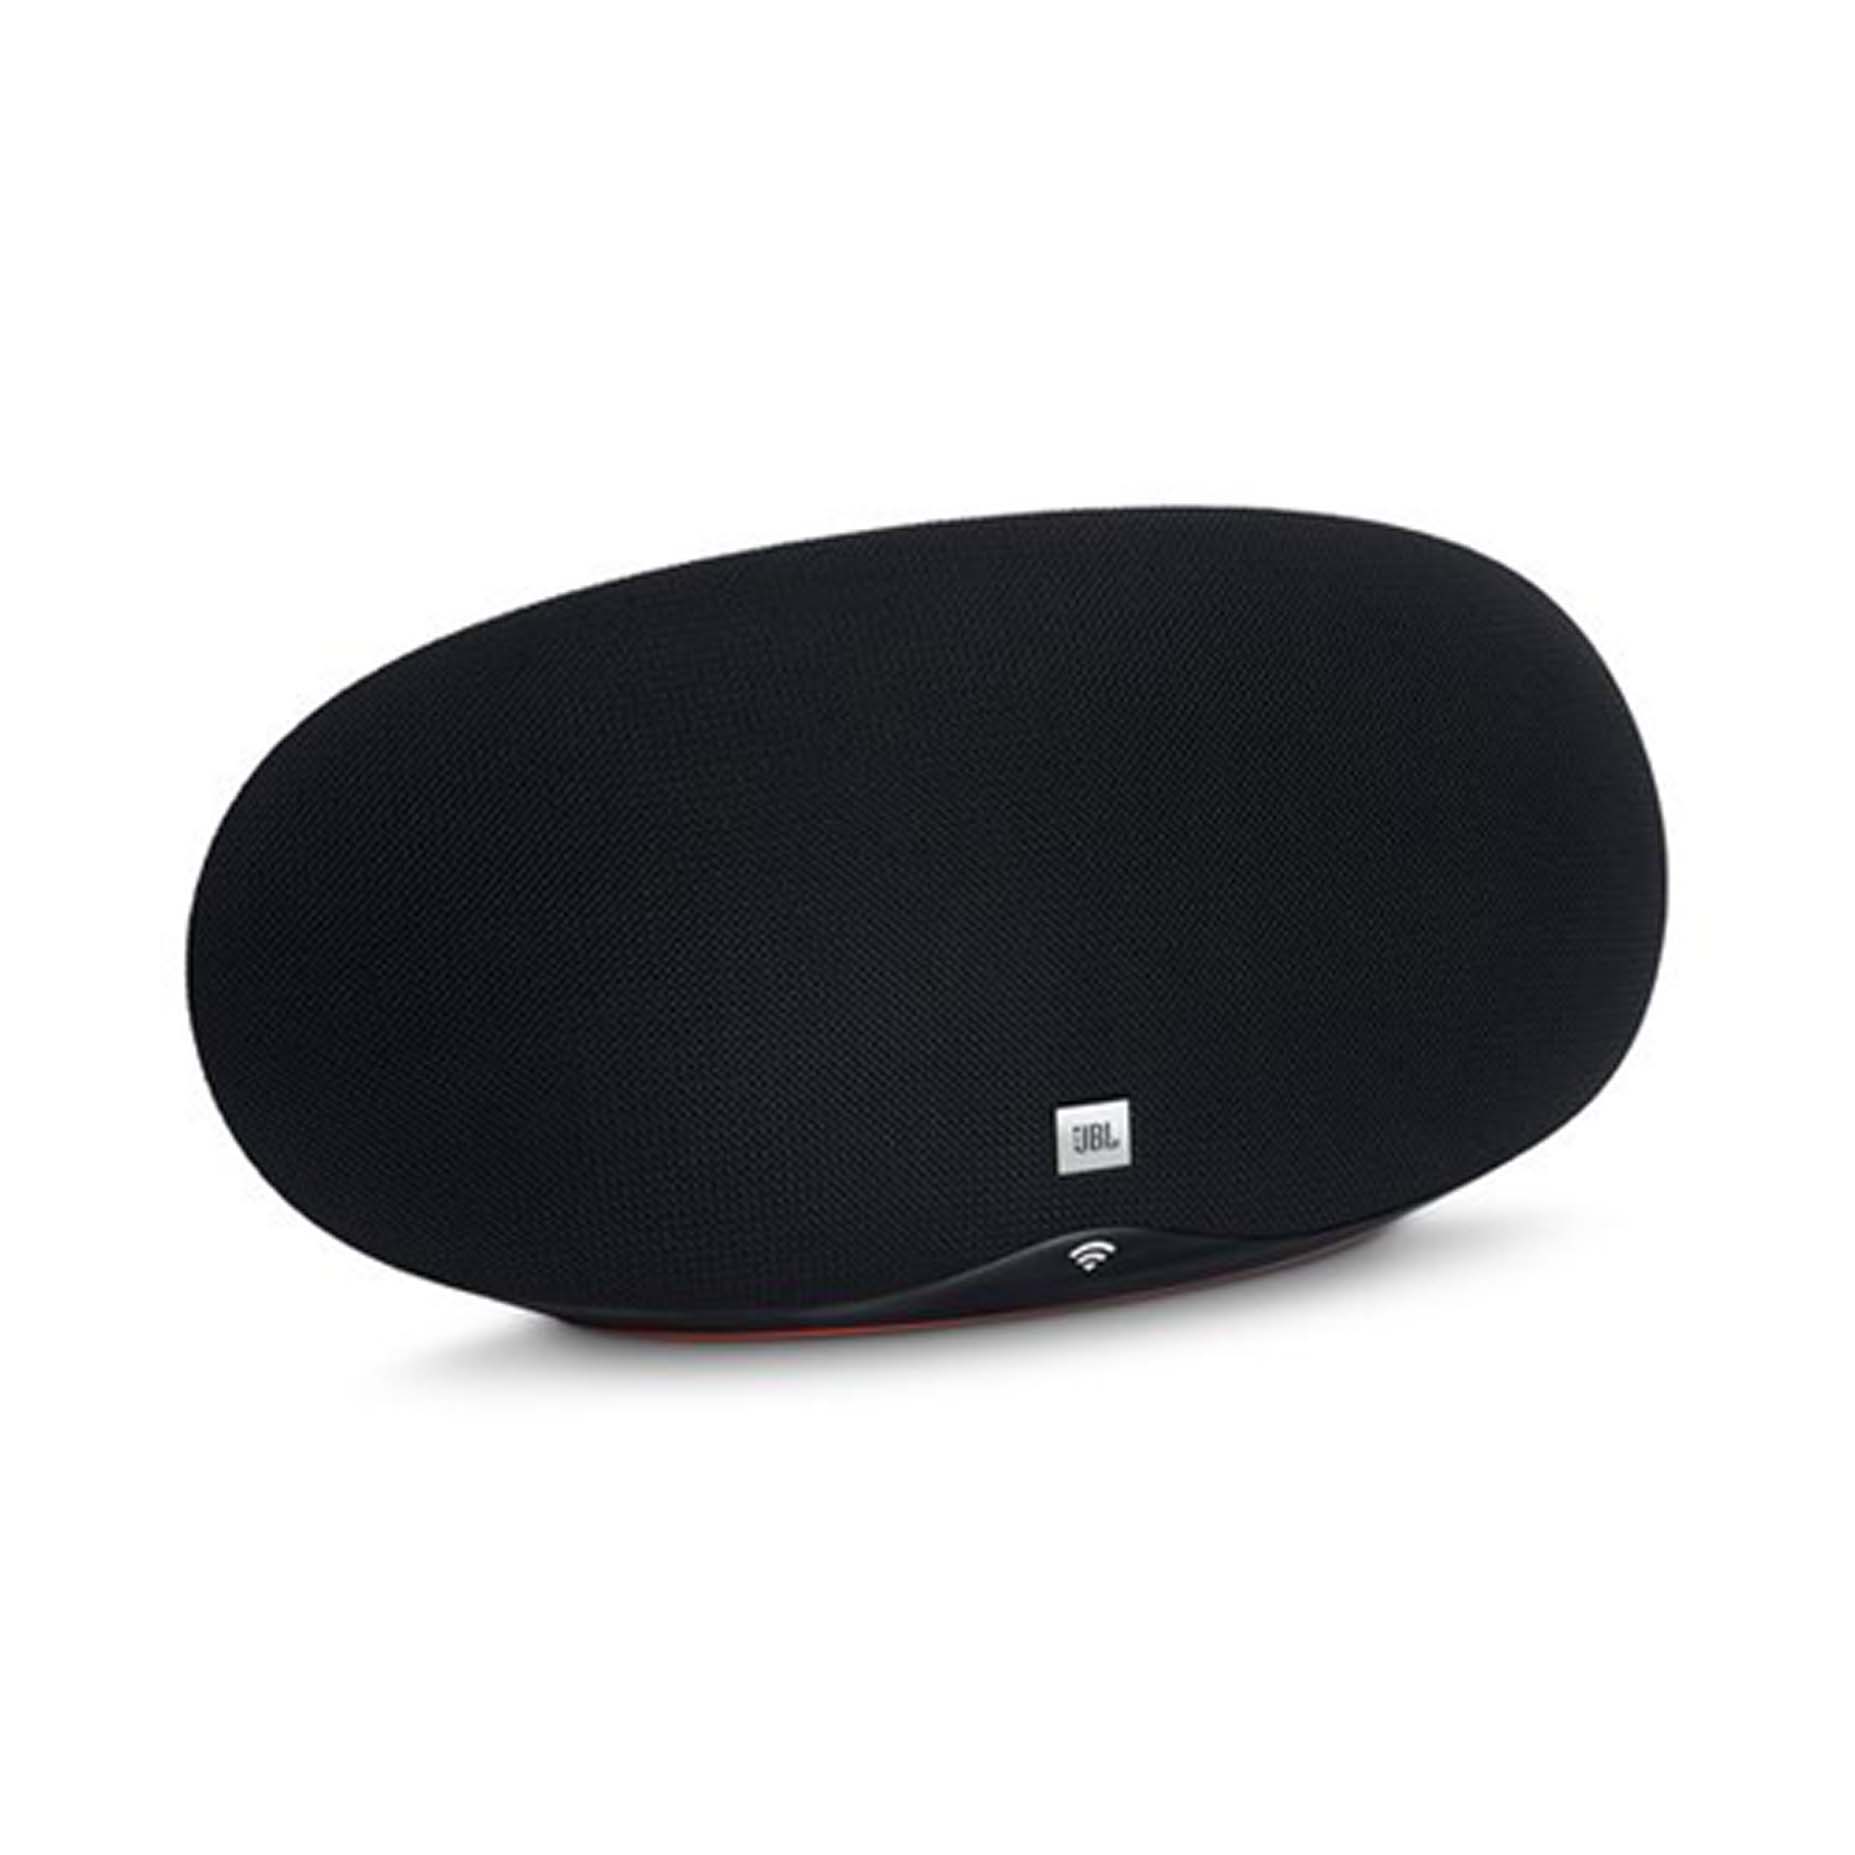 Harga JBL Playlist Wireless speaker with Built-In Chromecast Black